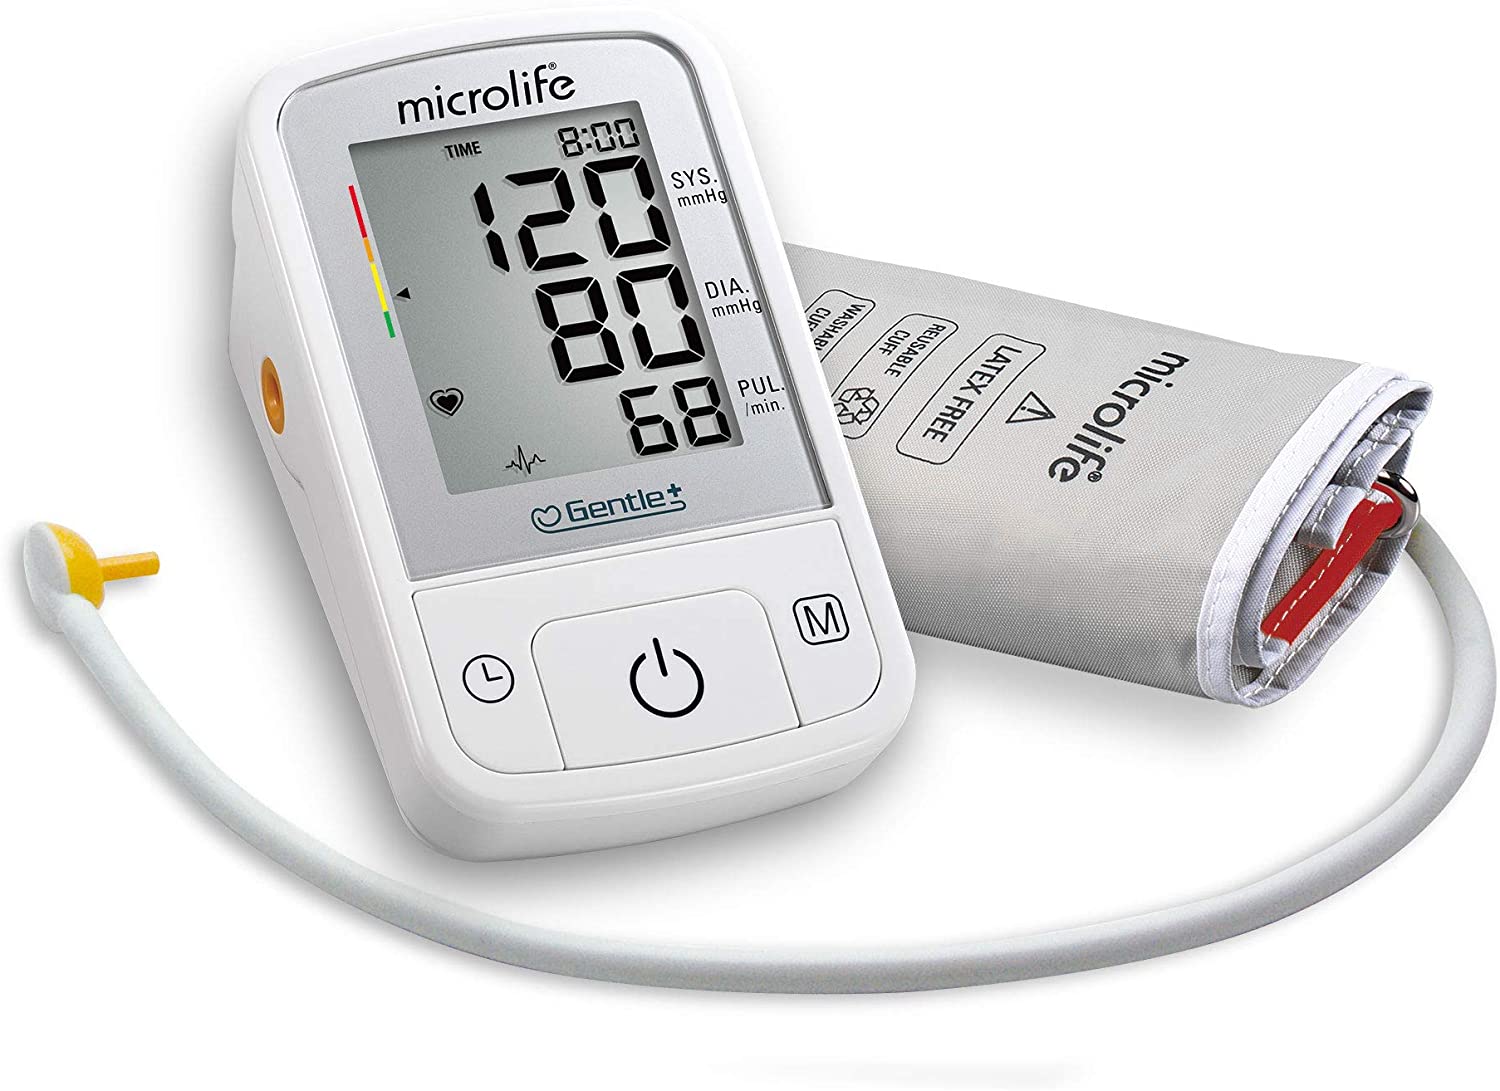  Microlife BP3GX1-5A Premium Blood Pressure Monitor